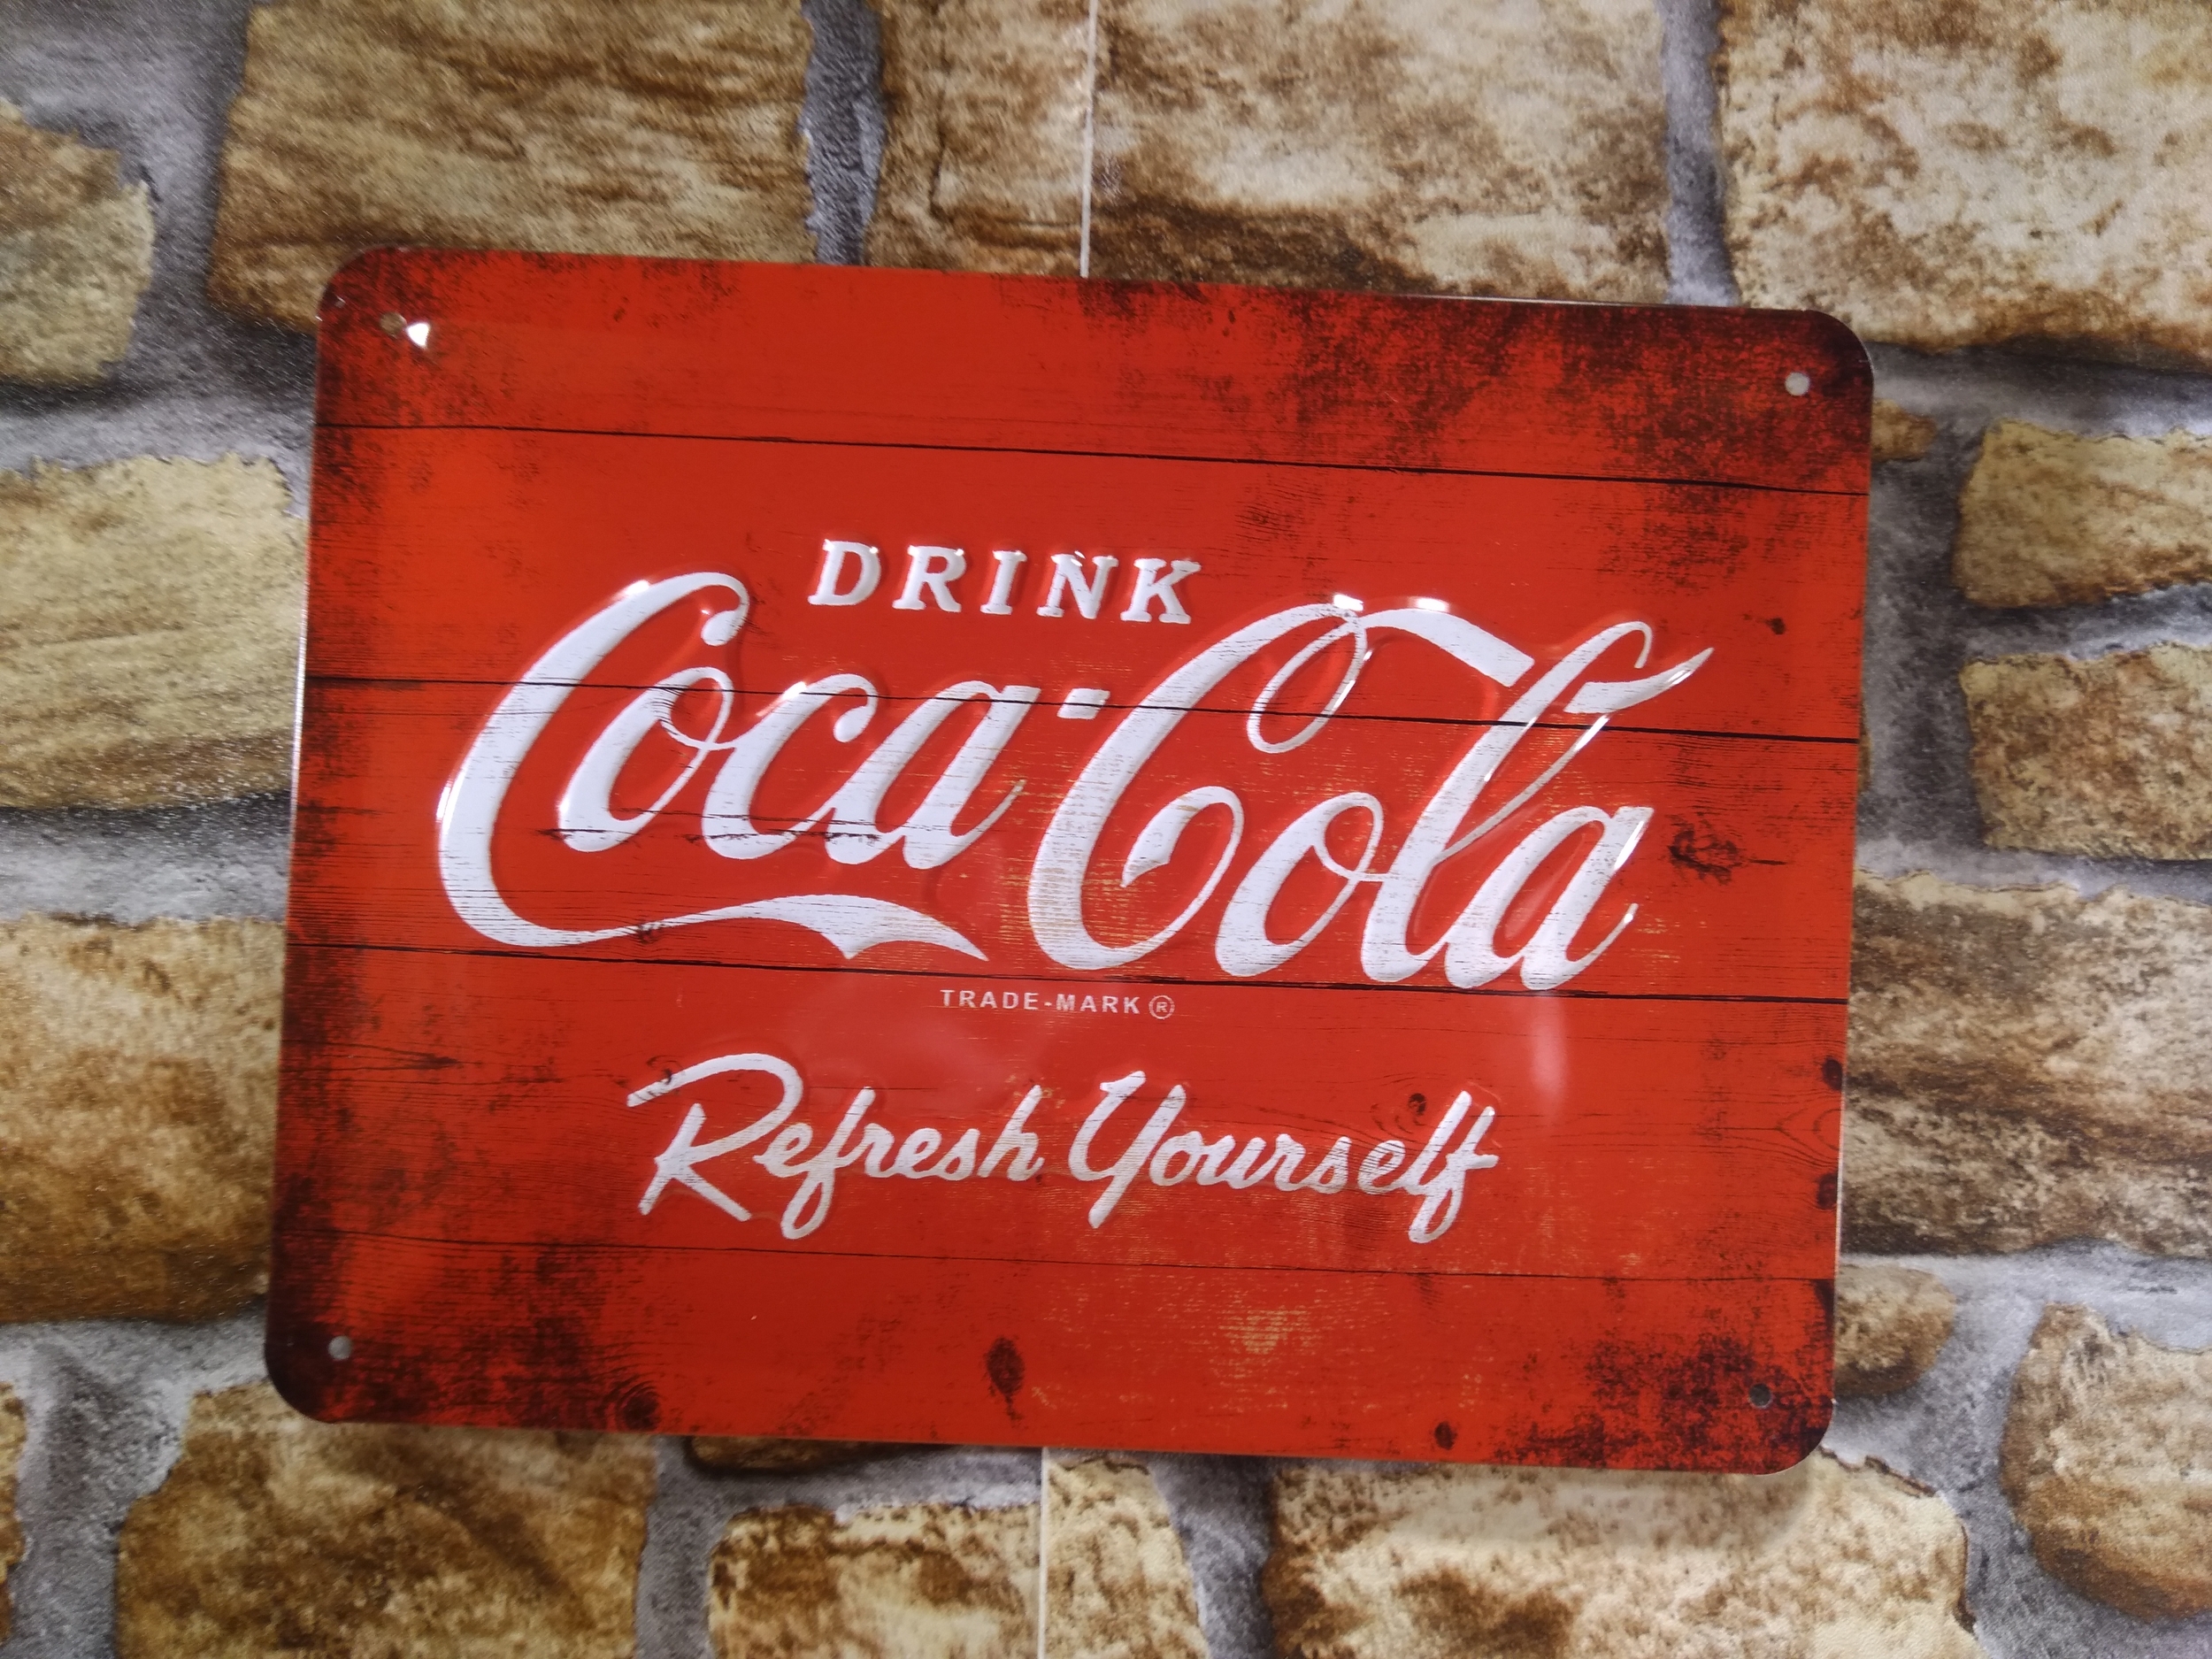 plaque publicitaire relief coca cola